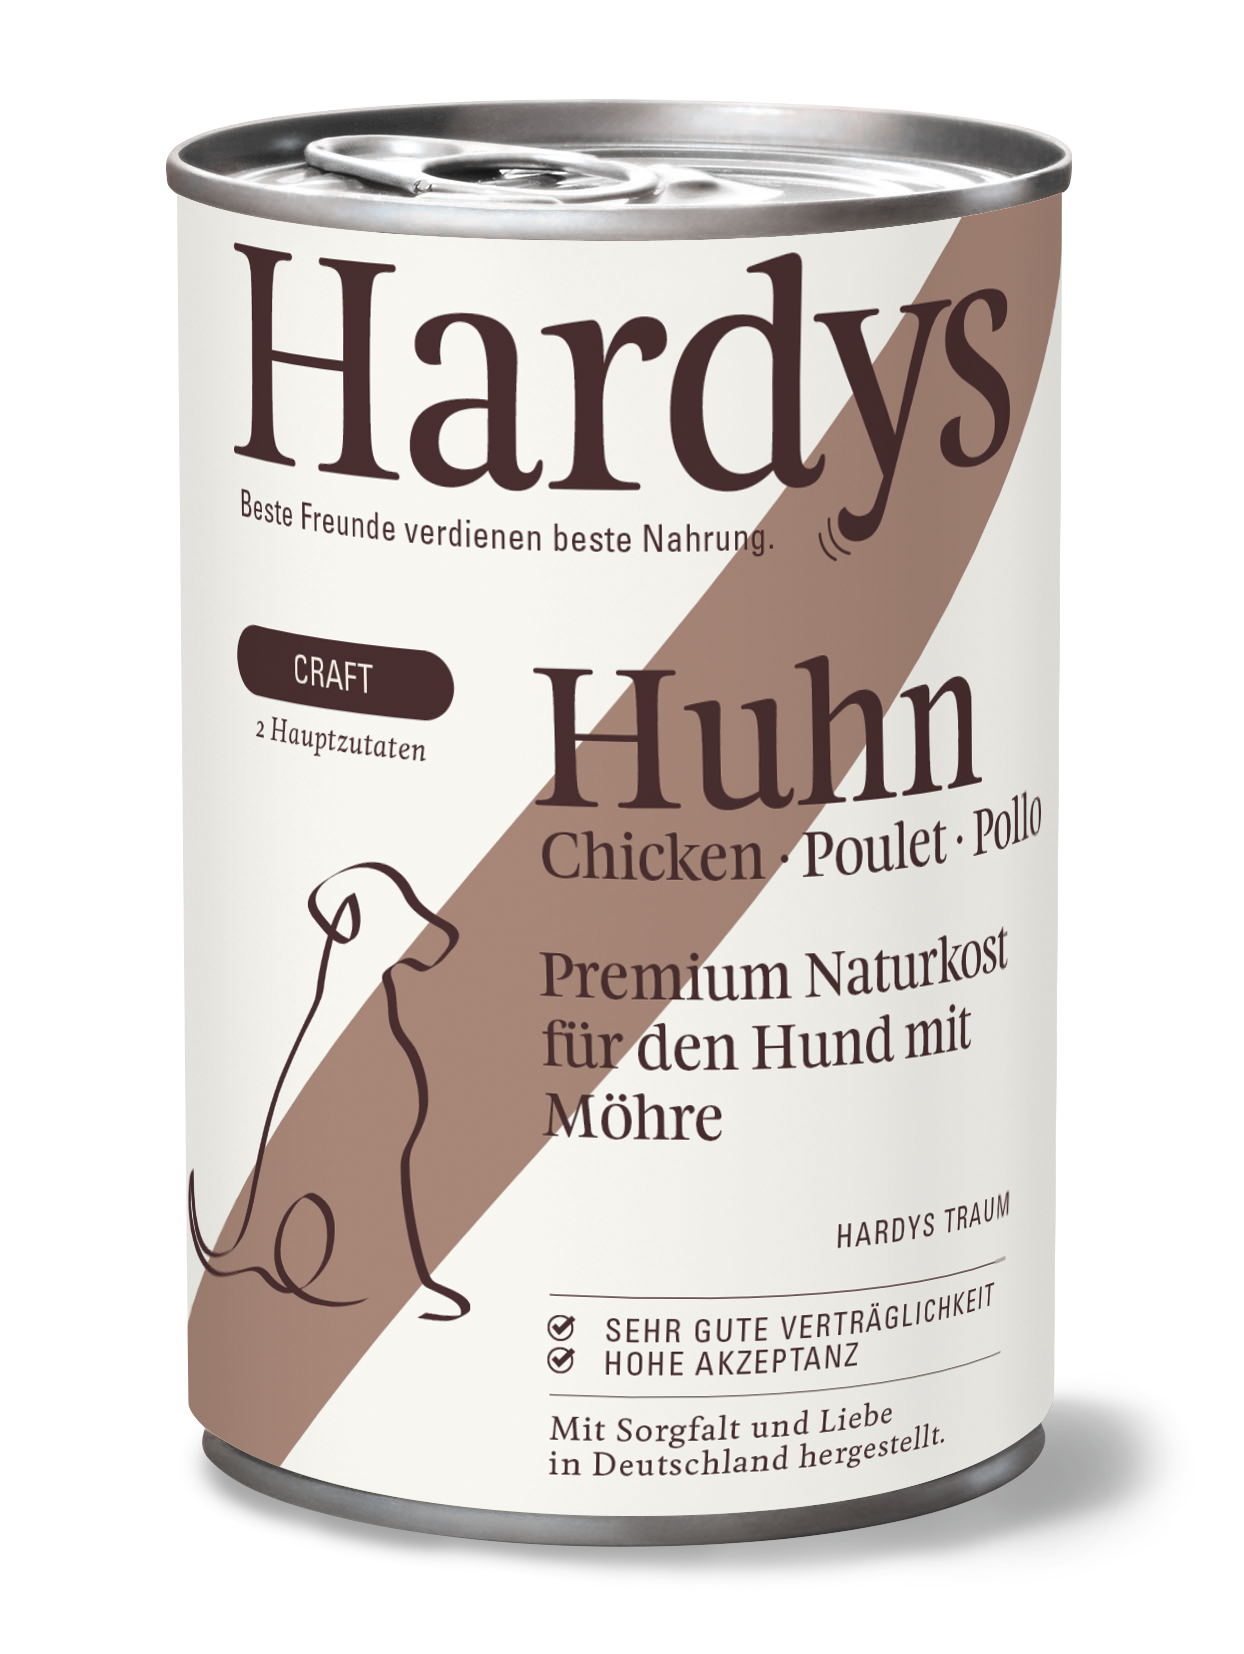 Hardys Craft Huhn & Karotte, 400 g